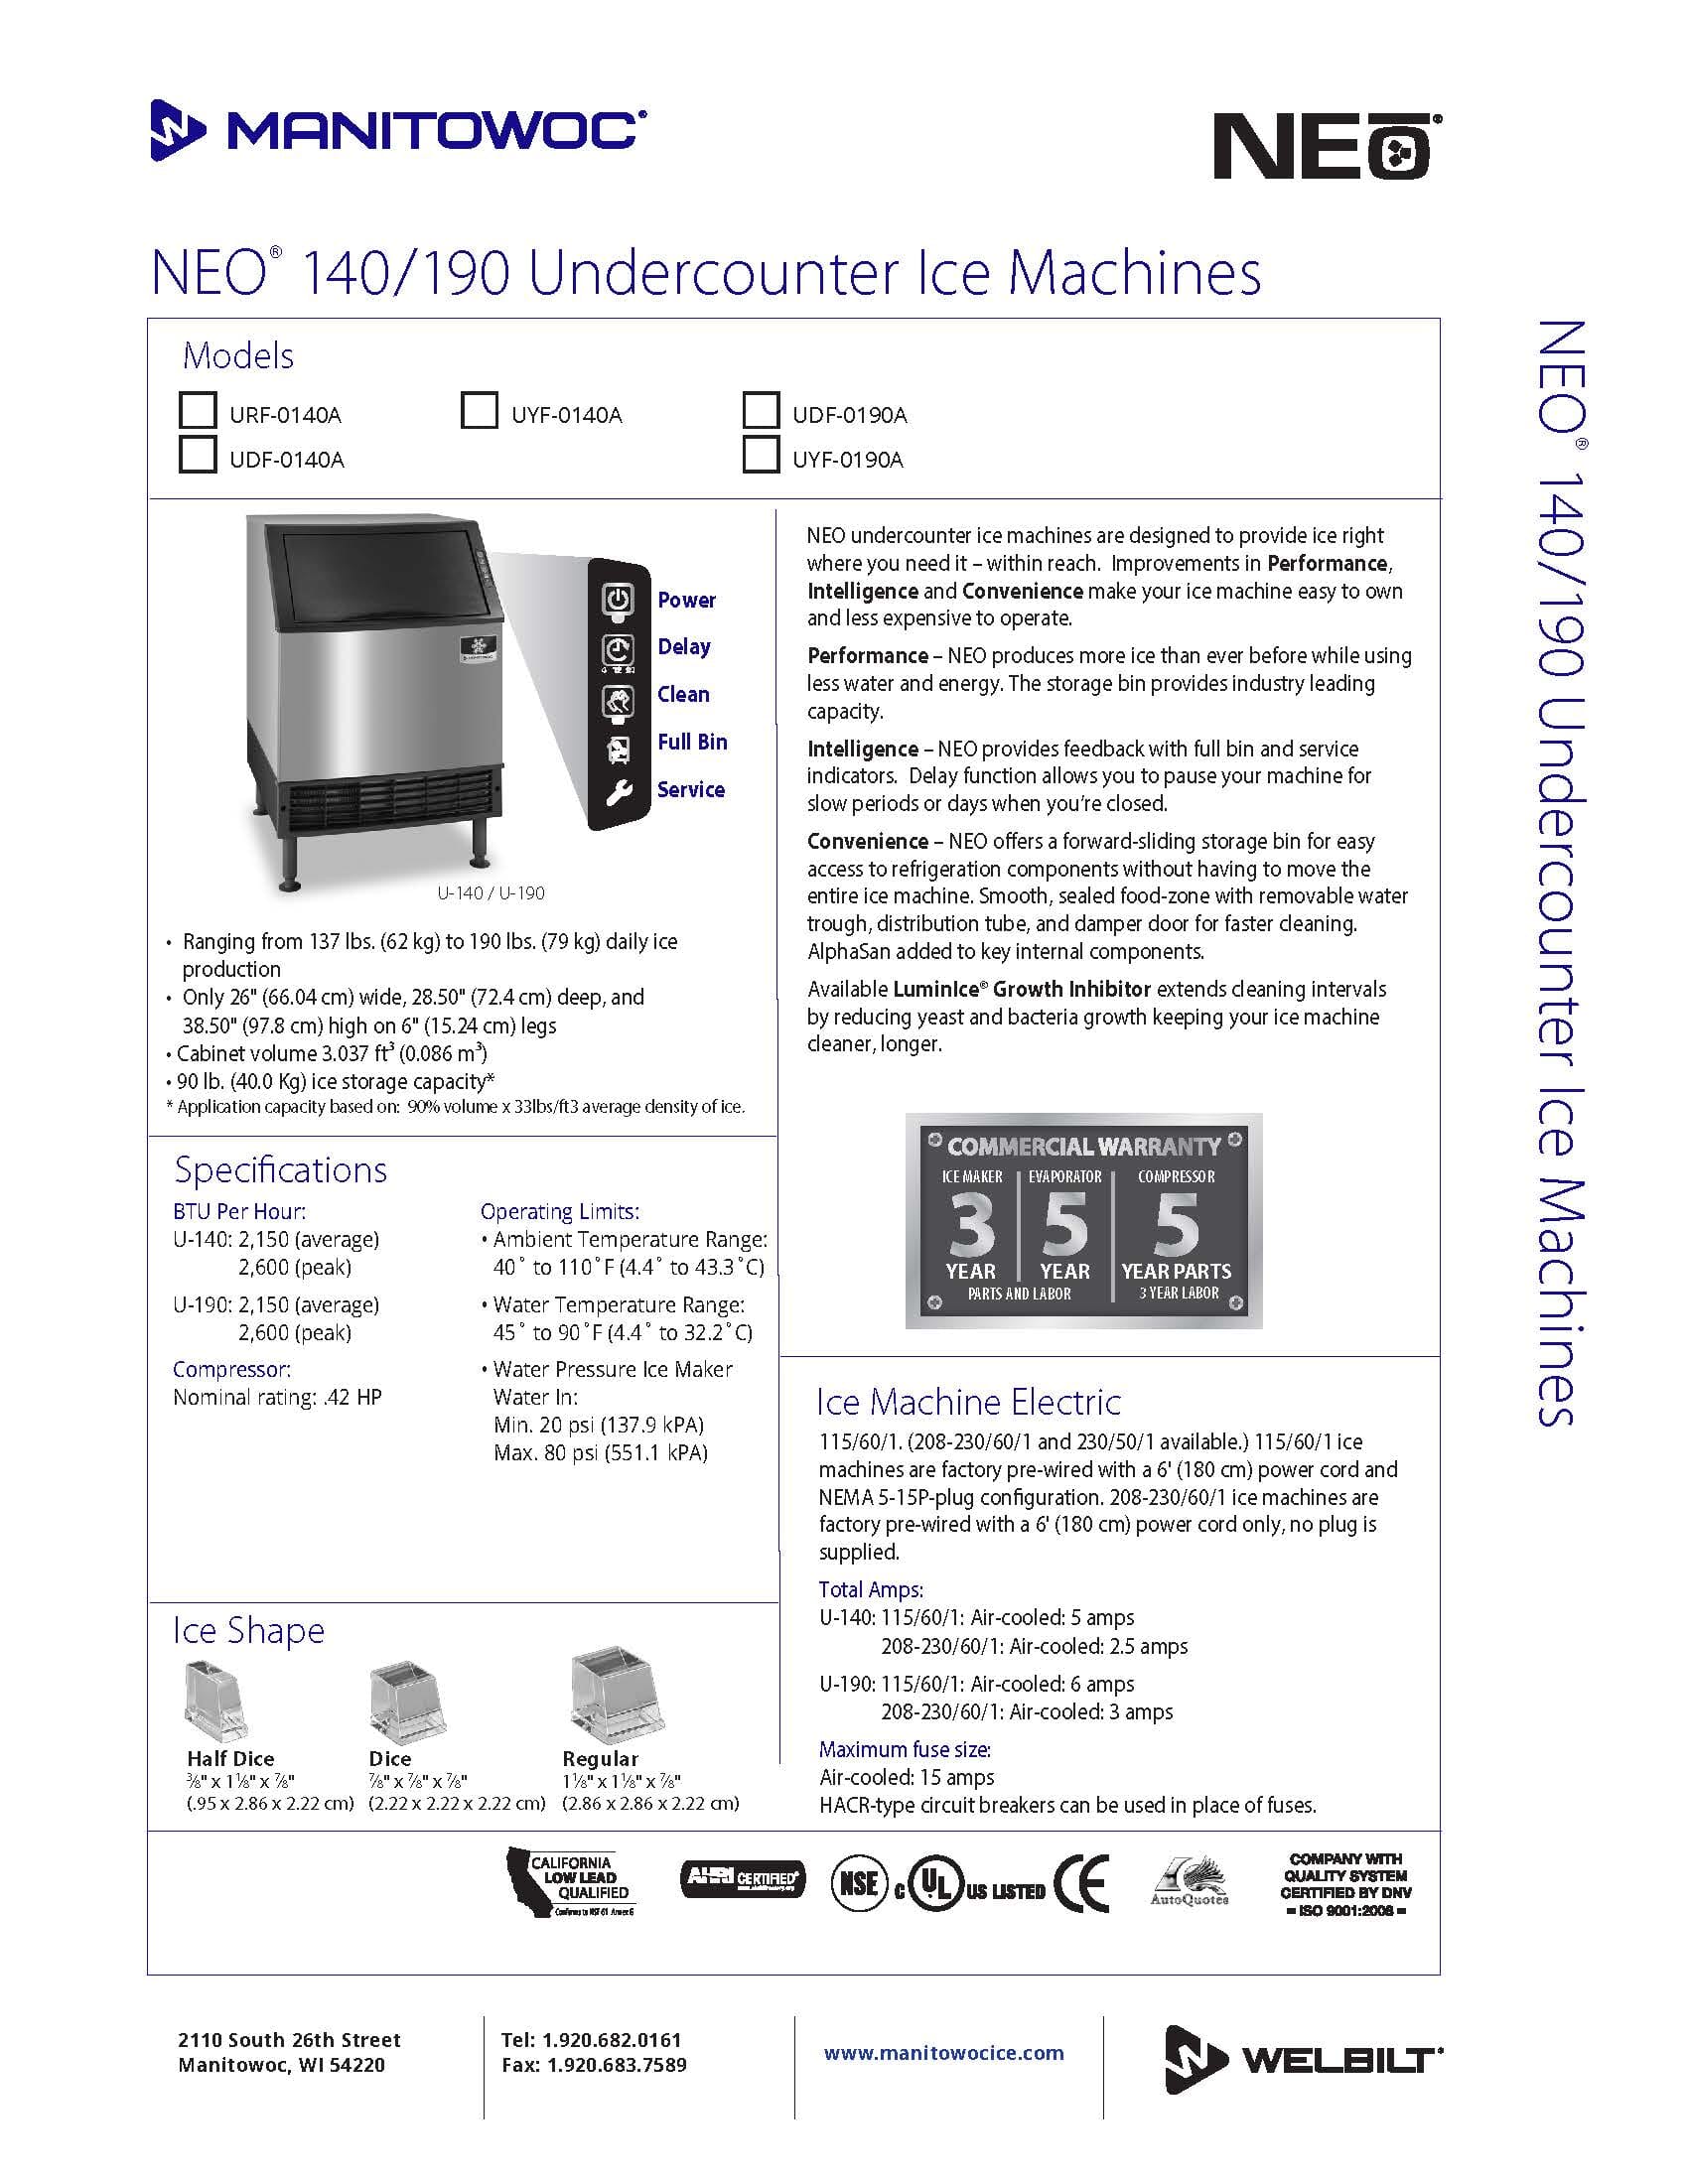 Manitowoc UYF0140A 137lb NEO Series Undercounter Half Dice Ice Machine Atosa 